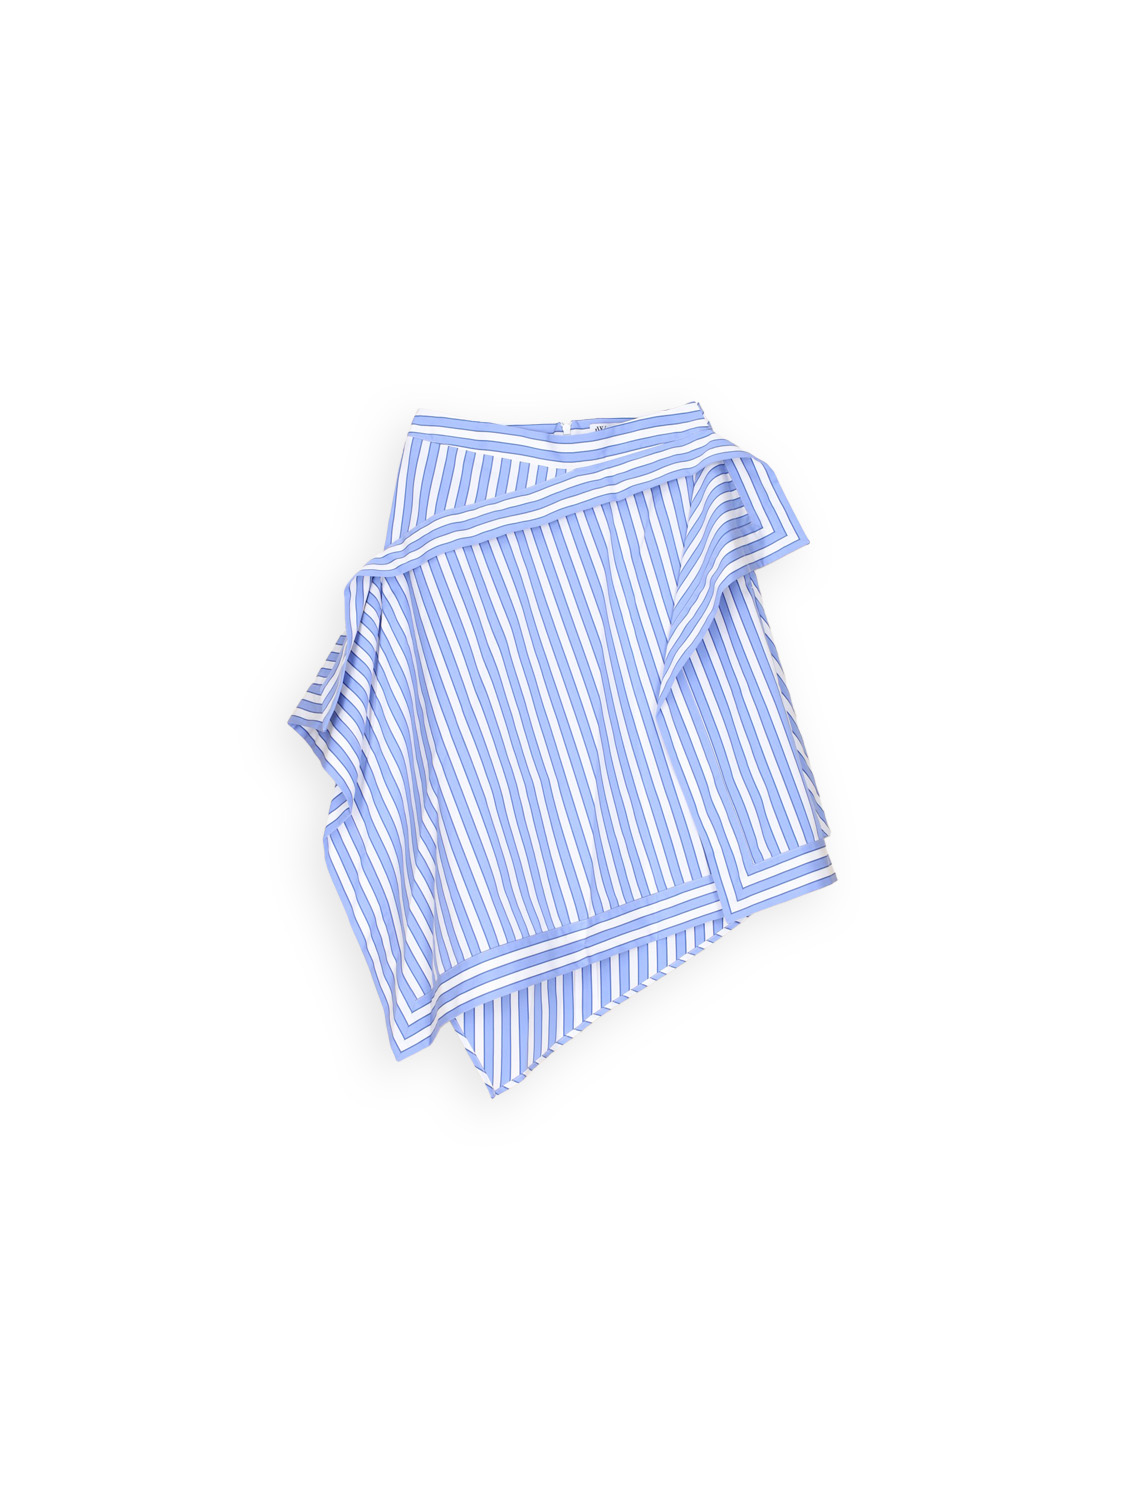 Asymmetric cotton skirt with striped design 